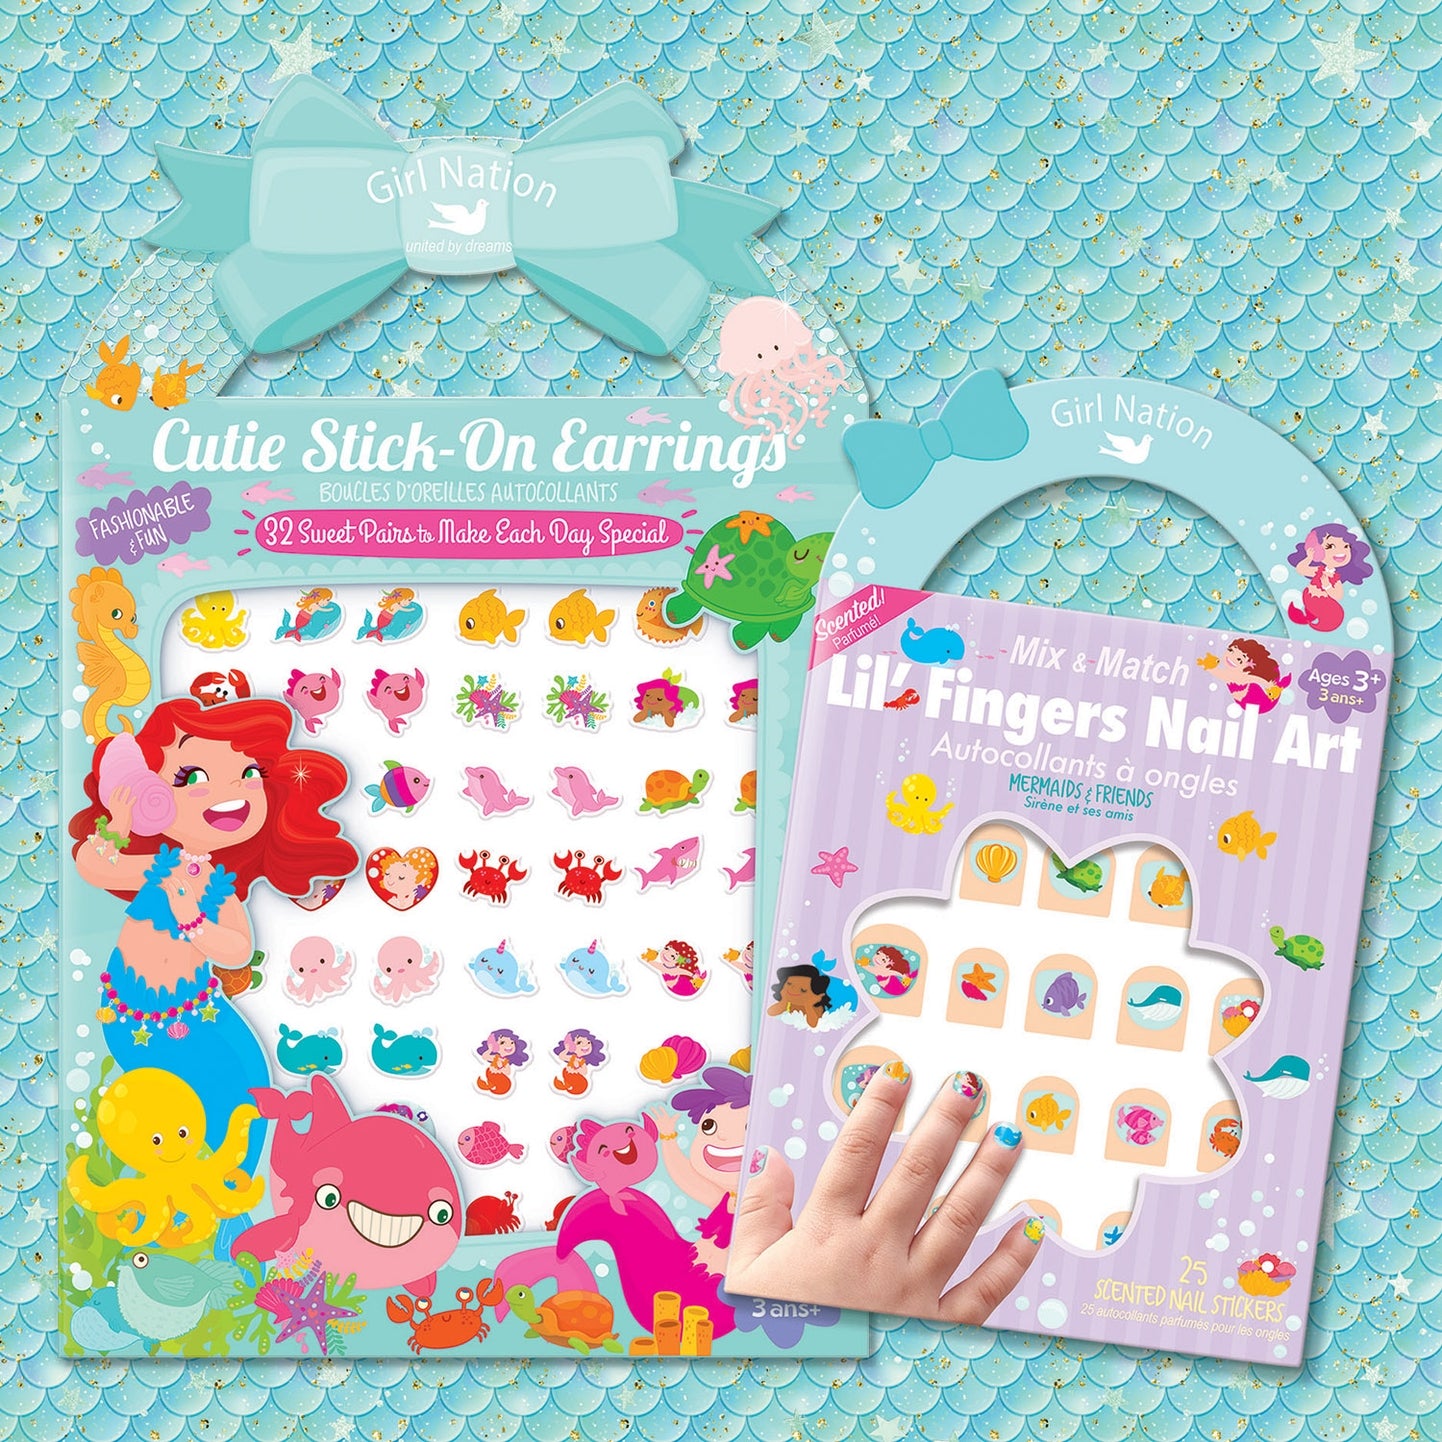 Cutie Stick-On Earring and Nail Sticker Gift Set - Mermaids - Twinkle Twinkle Little One